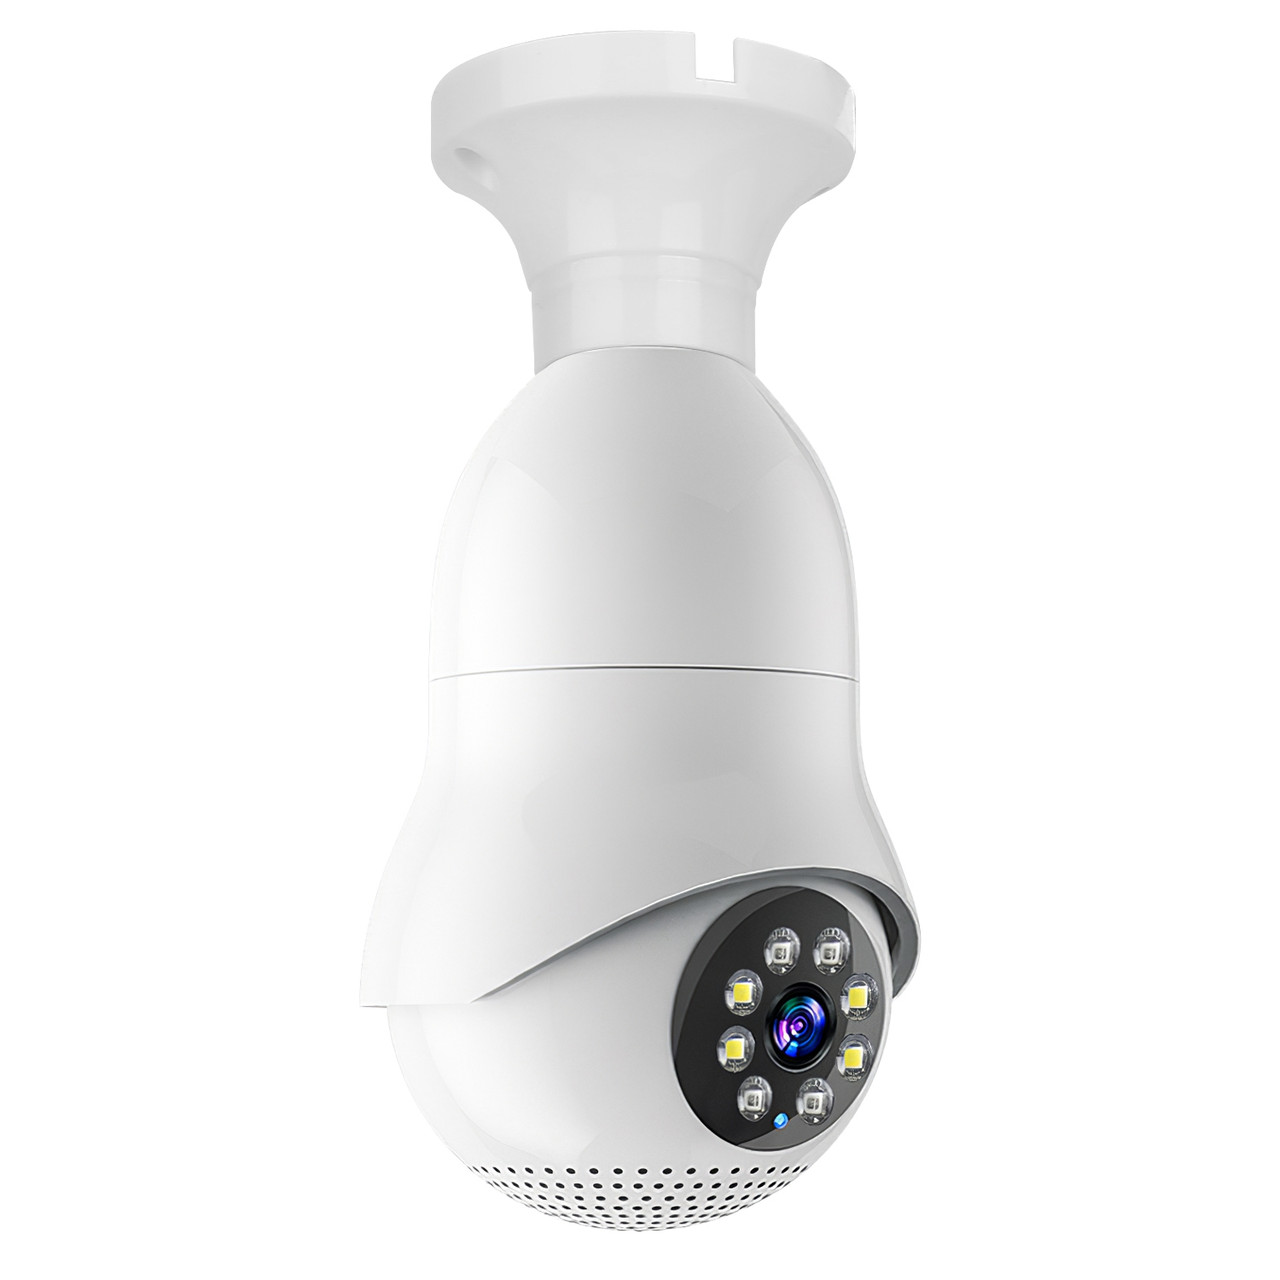 iMounTEK® Light Bulb Security Camera product image